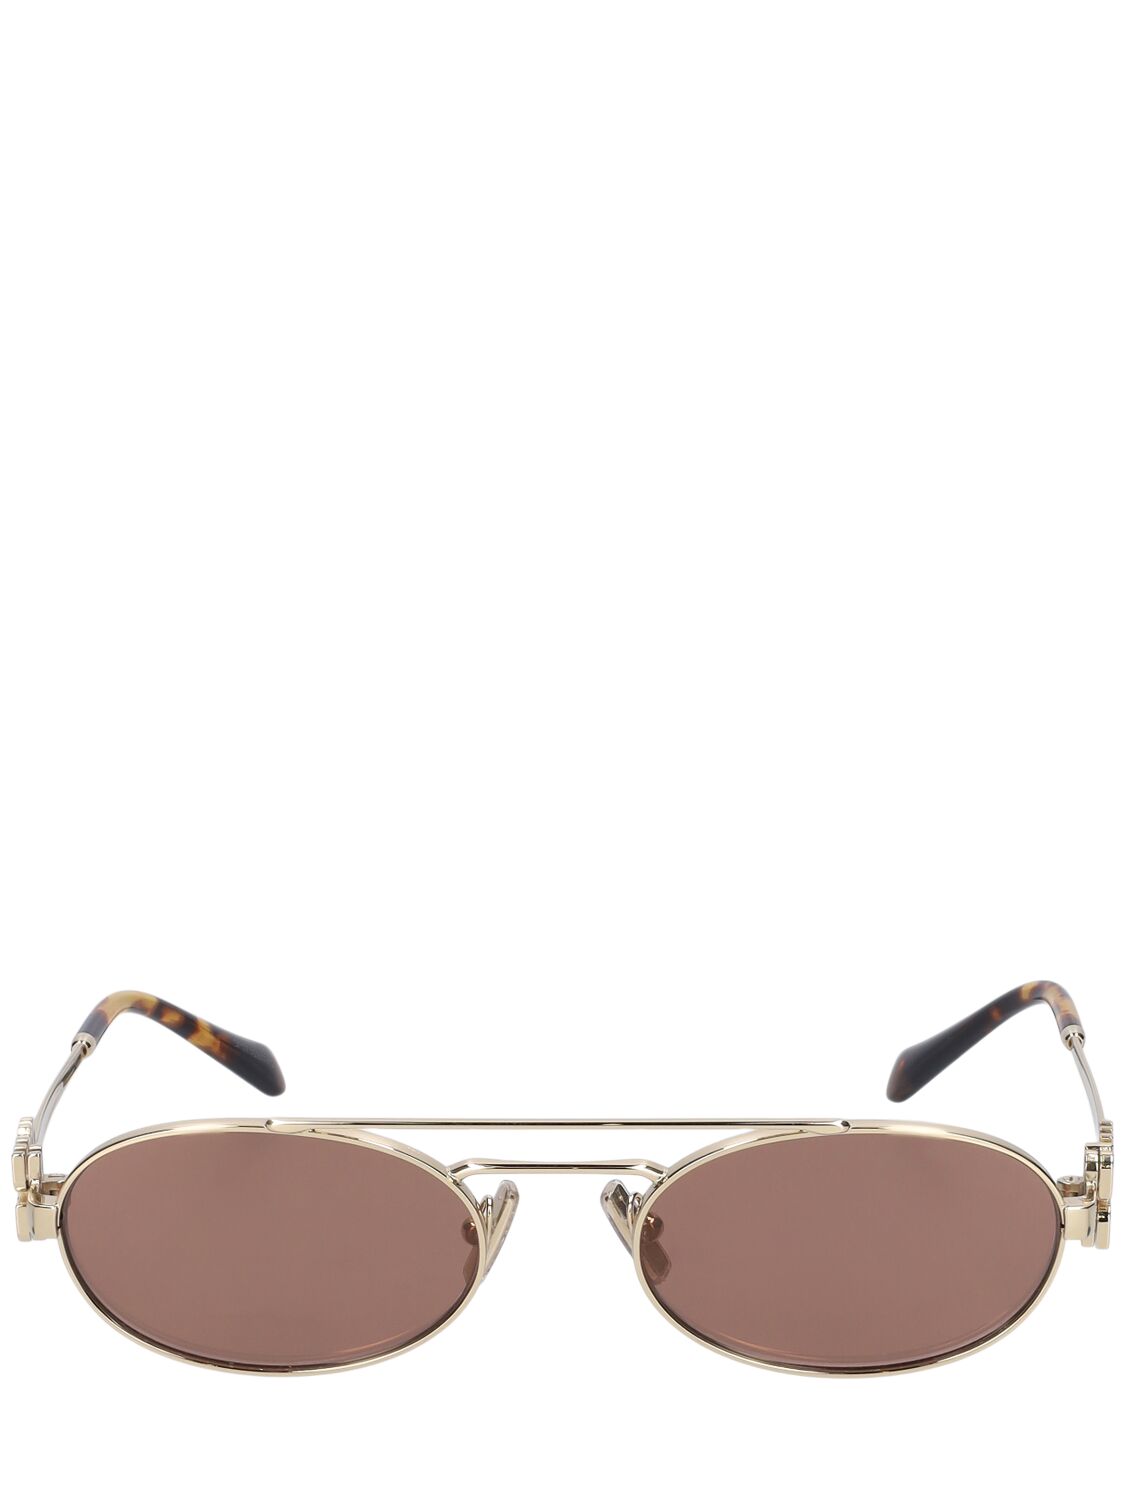 Miu Miu Round Metal Sunglasses In Brown